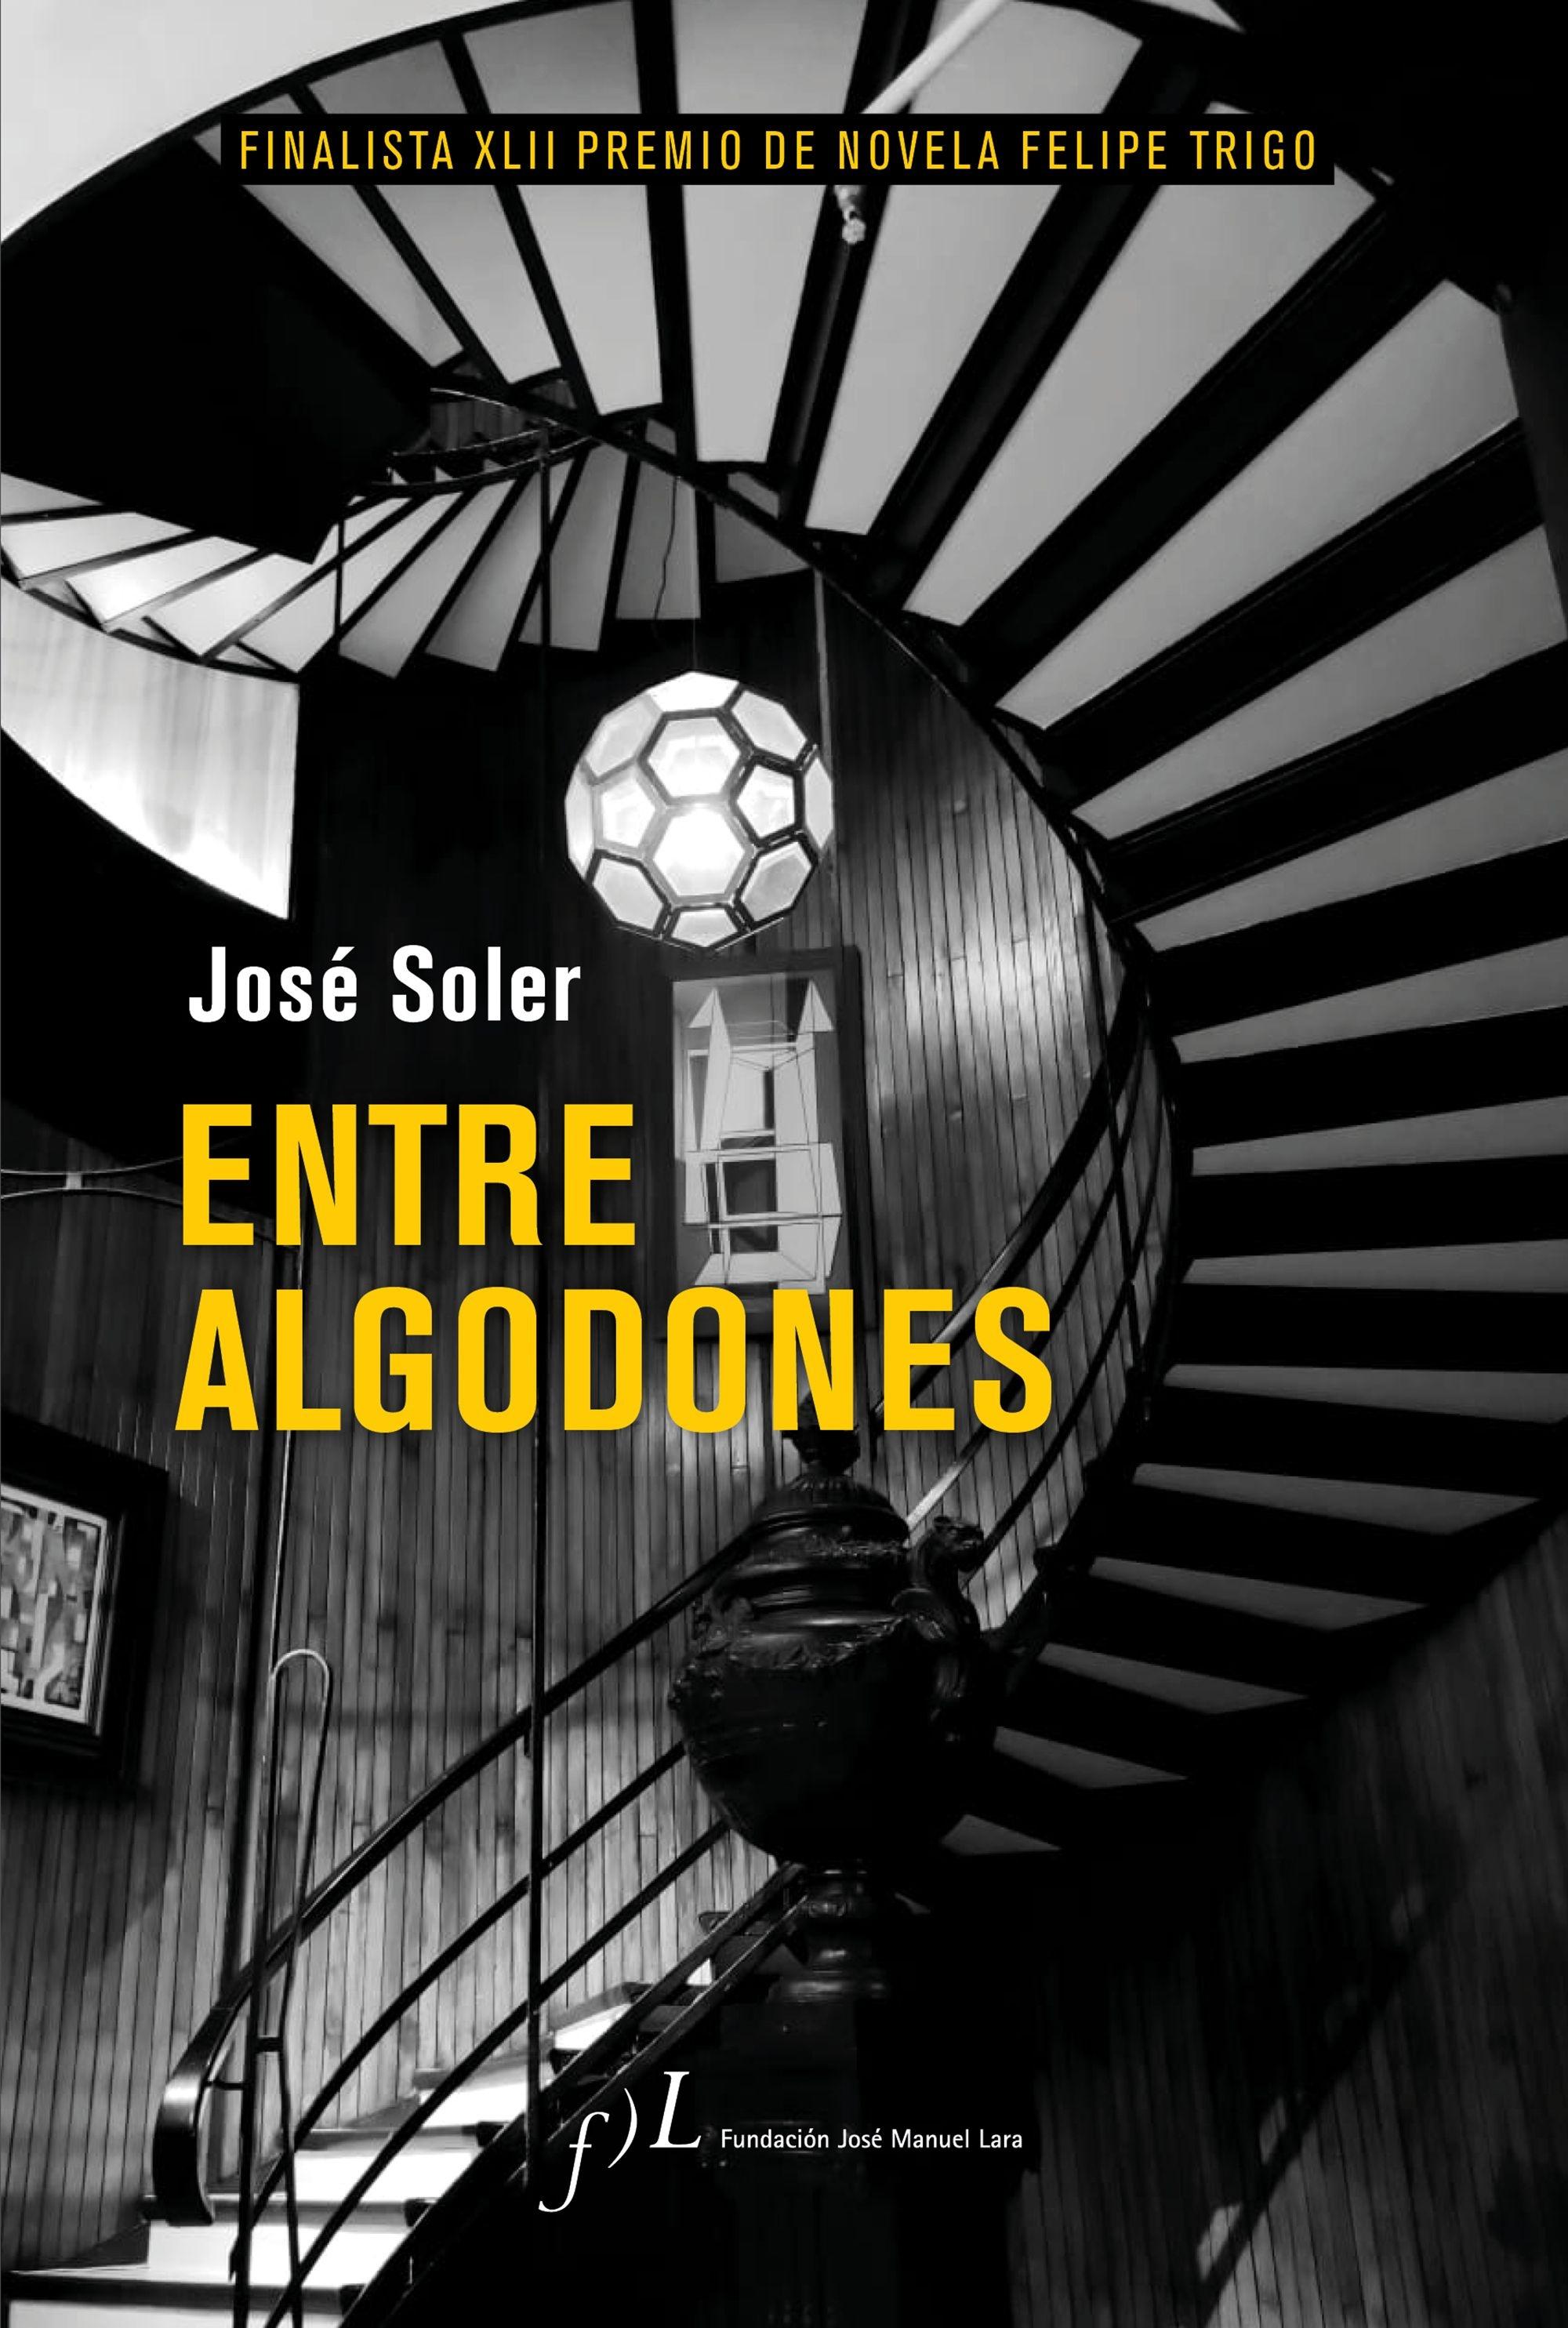 Entre Algodones "Finalista Xlii Premio de Novela Felipe Trigo". 